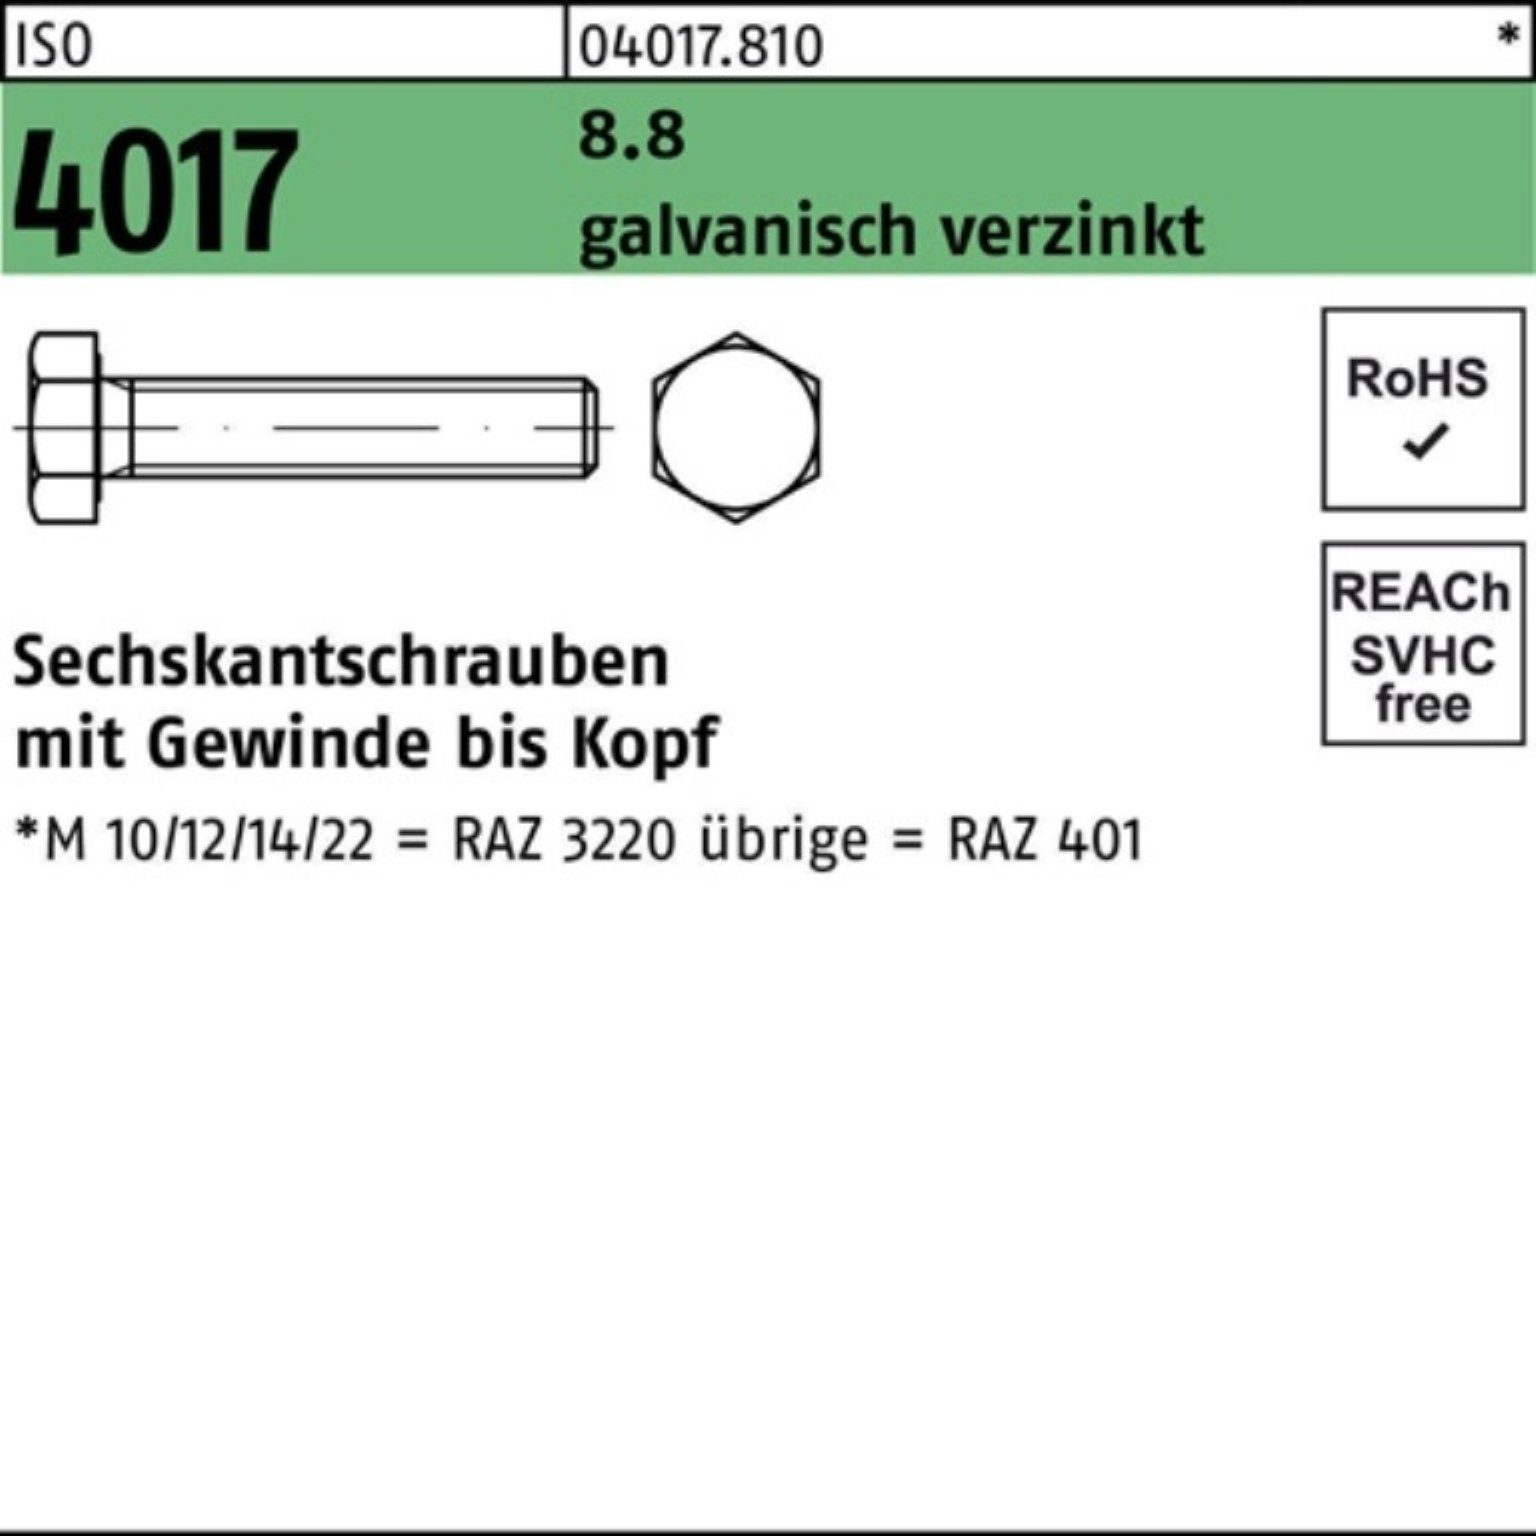 Bufab Sechskantschraube 100er Pack galv.verz. M30x 4017 Sechskantschraube 1 VG ISO 65 Stü 8.8